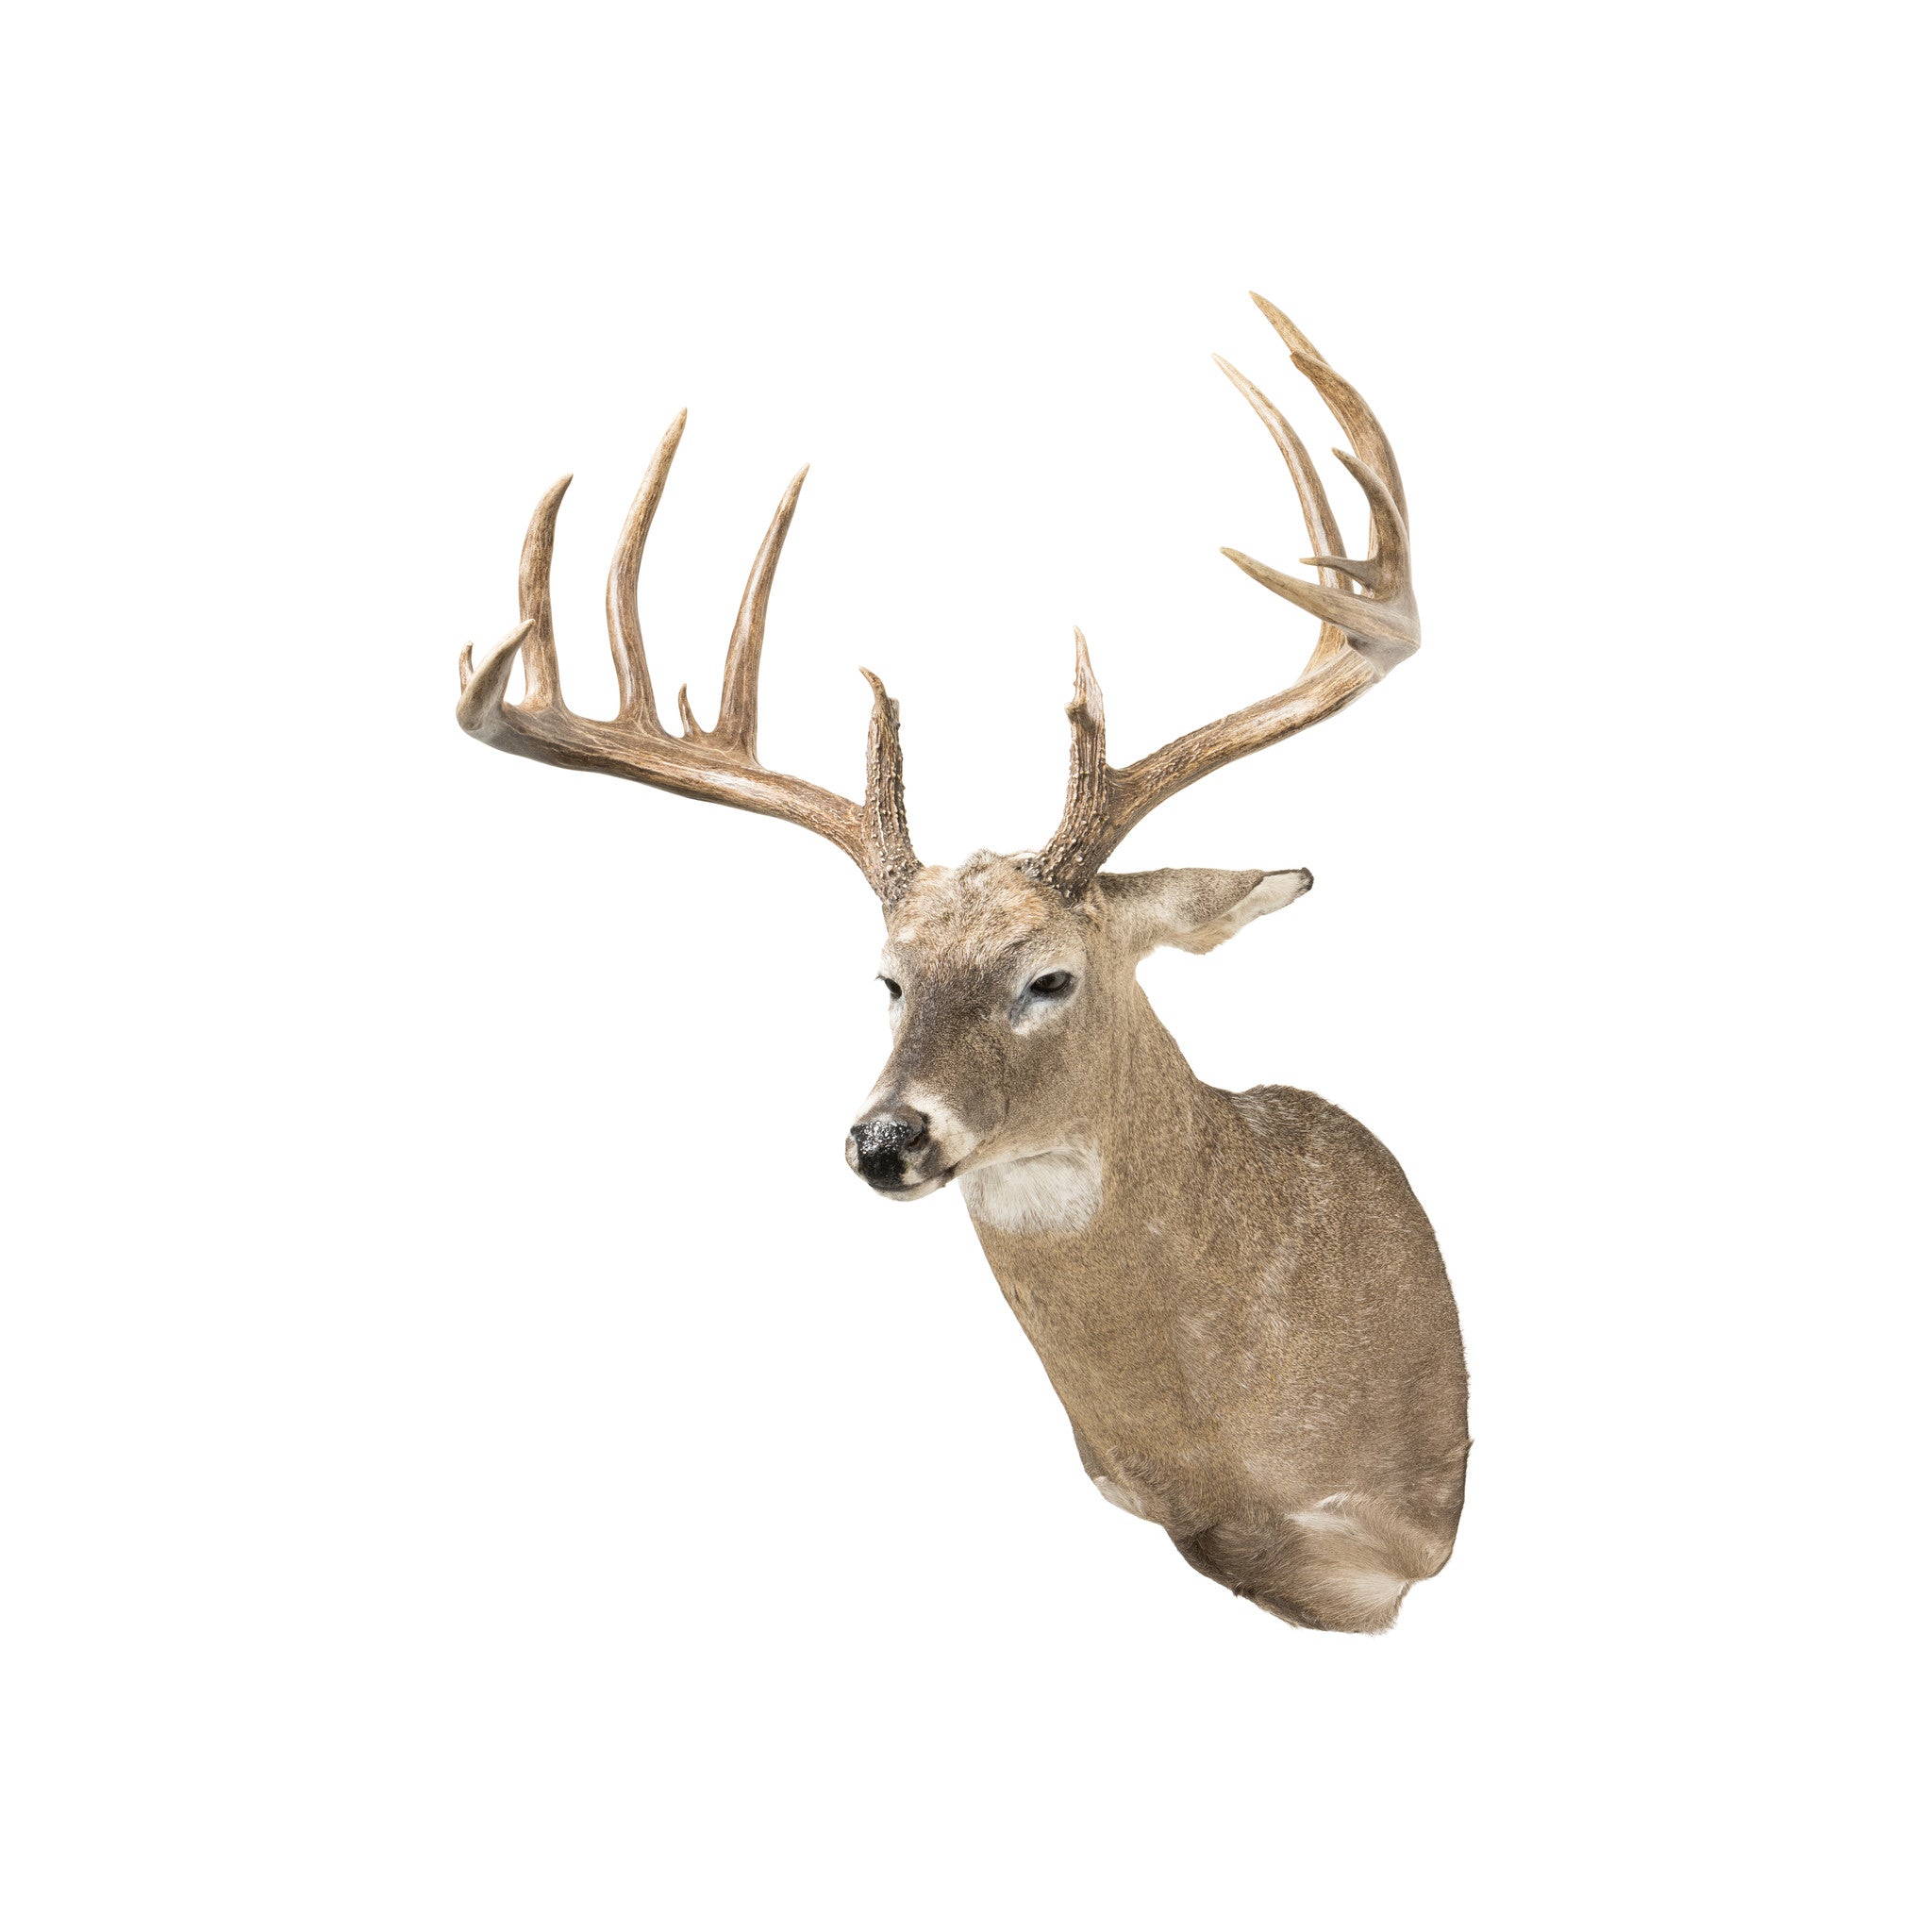 South Texas Brush Buck Whitetail Deer, Furnishings, Taxidermy, Deer